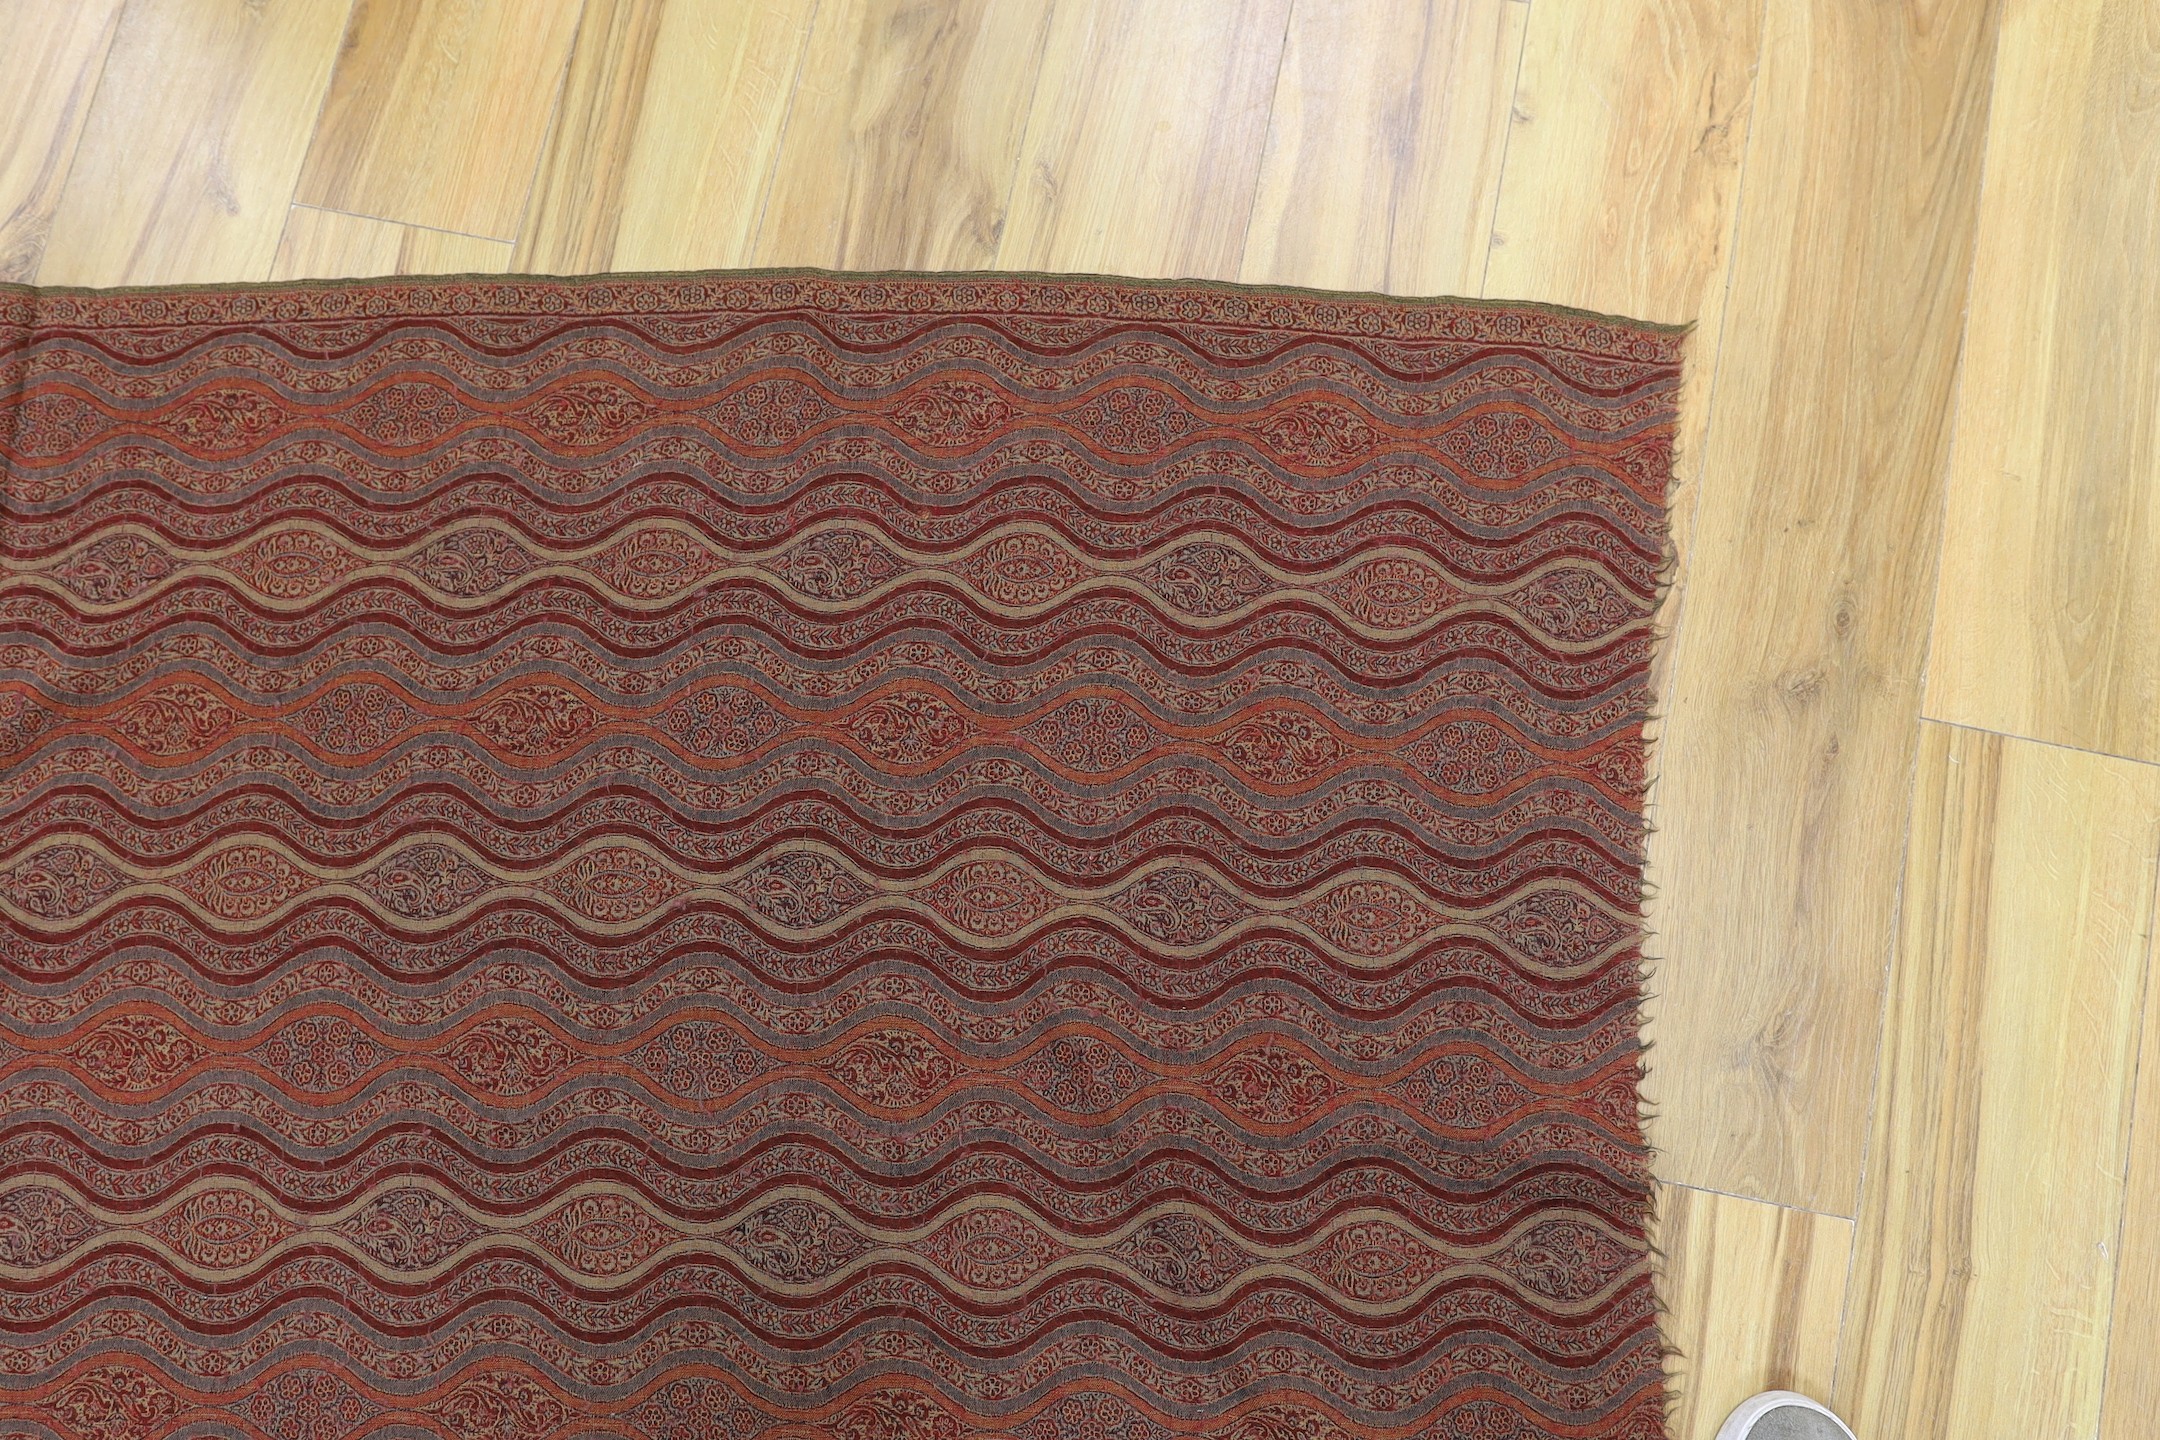 An Indian paisley shawl, 200 cms x 104 cms